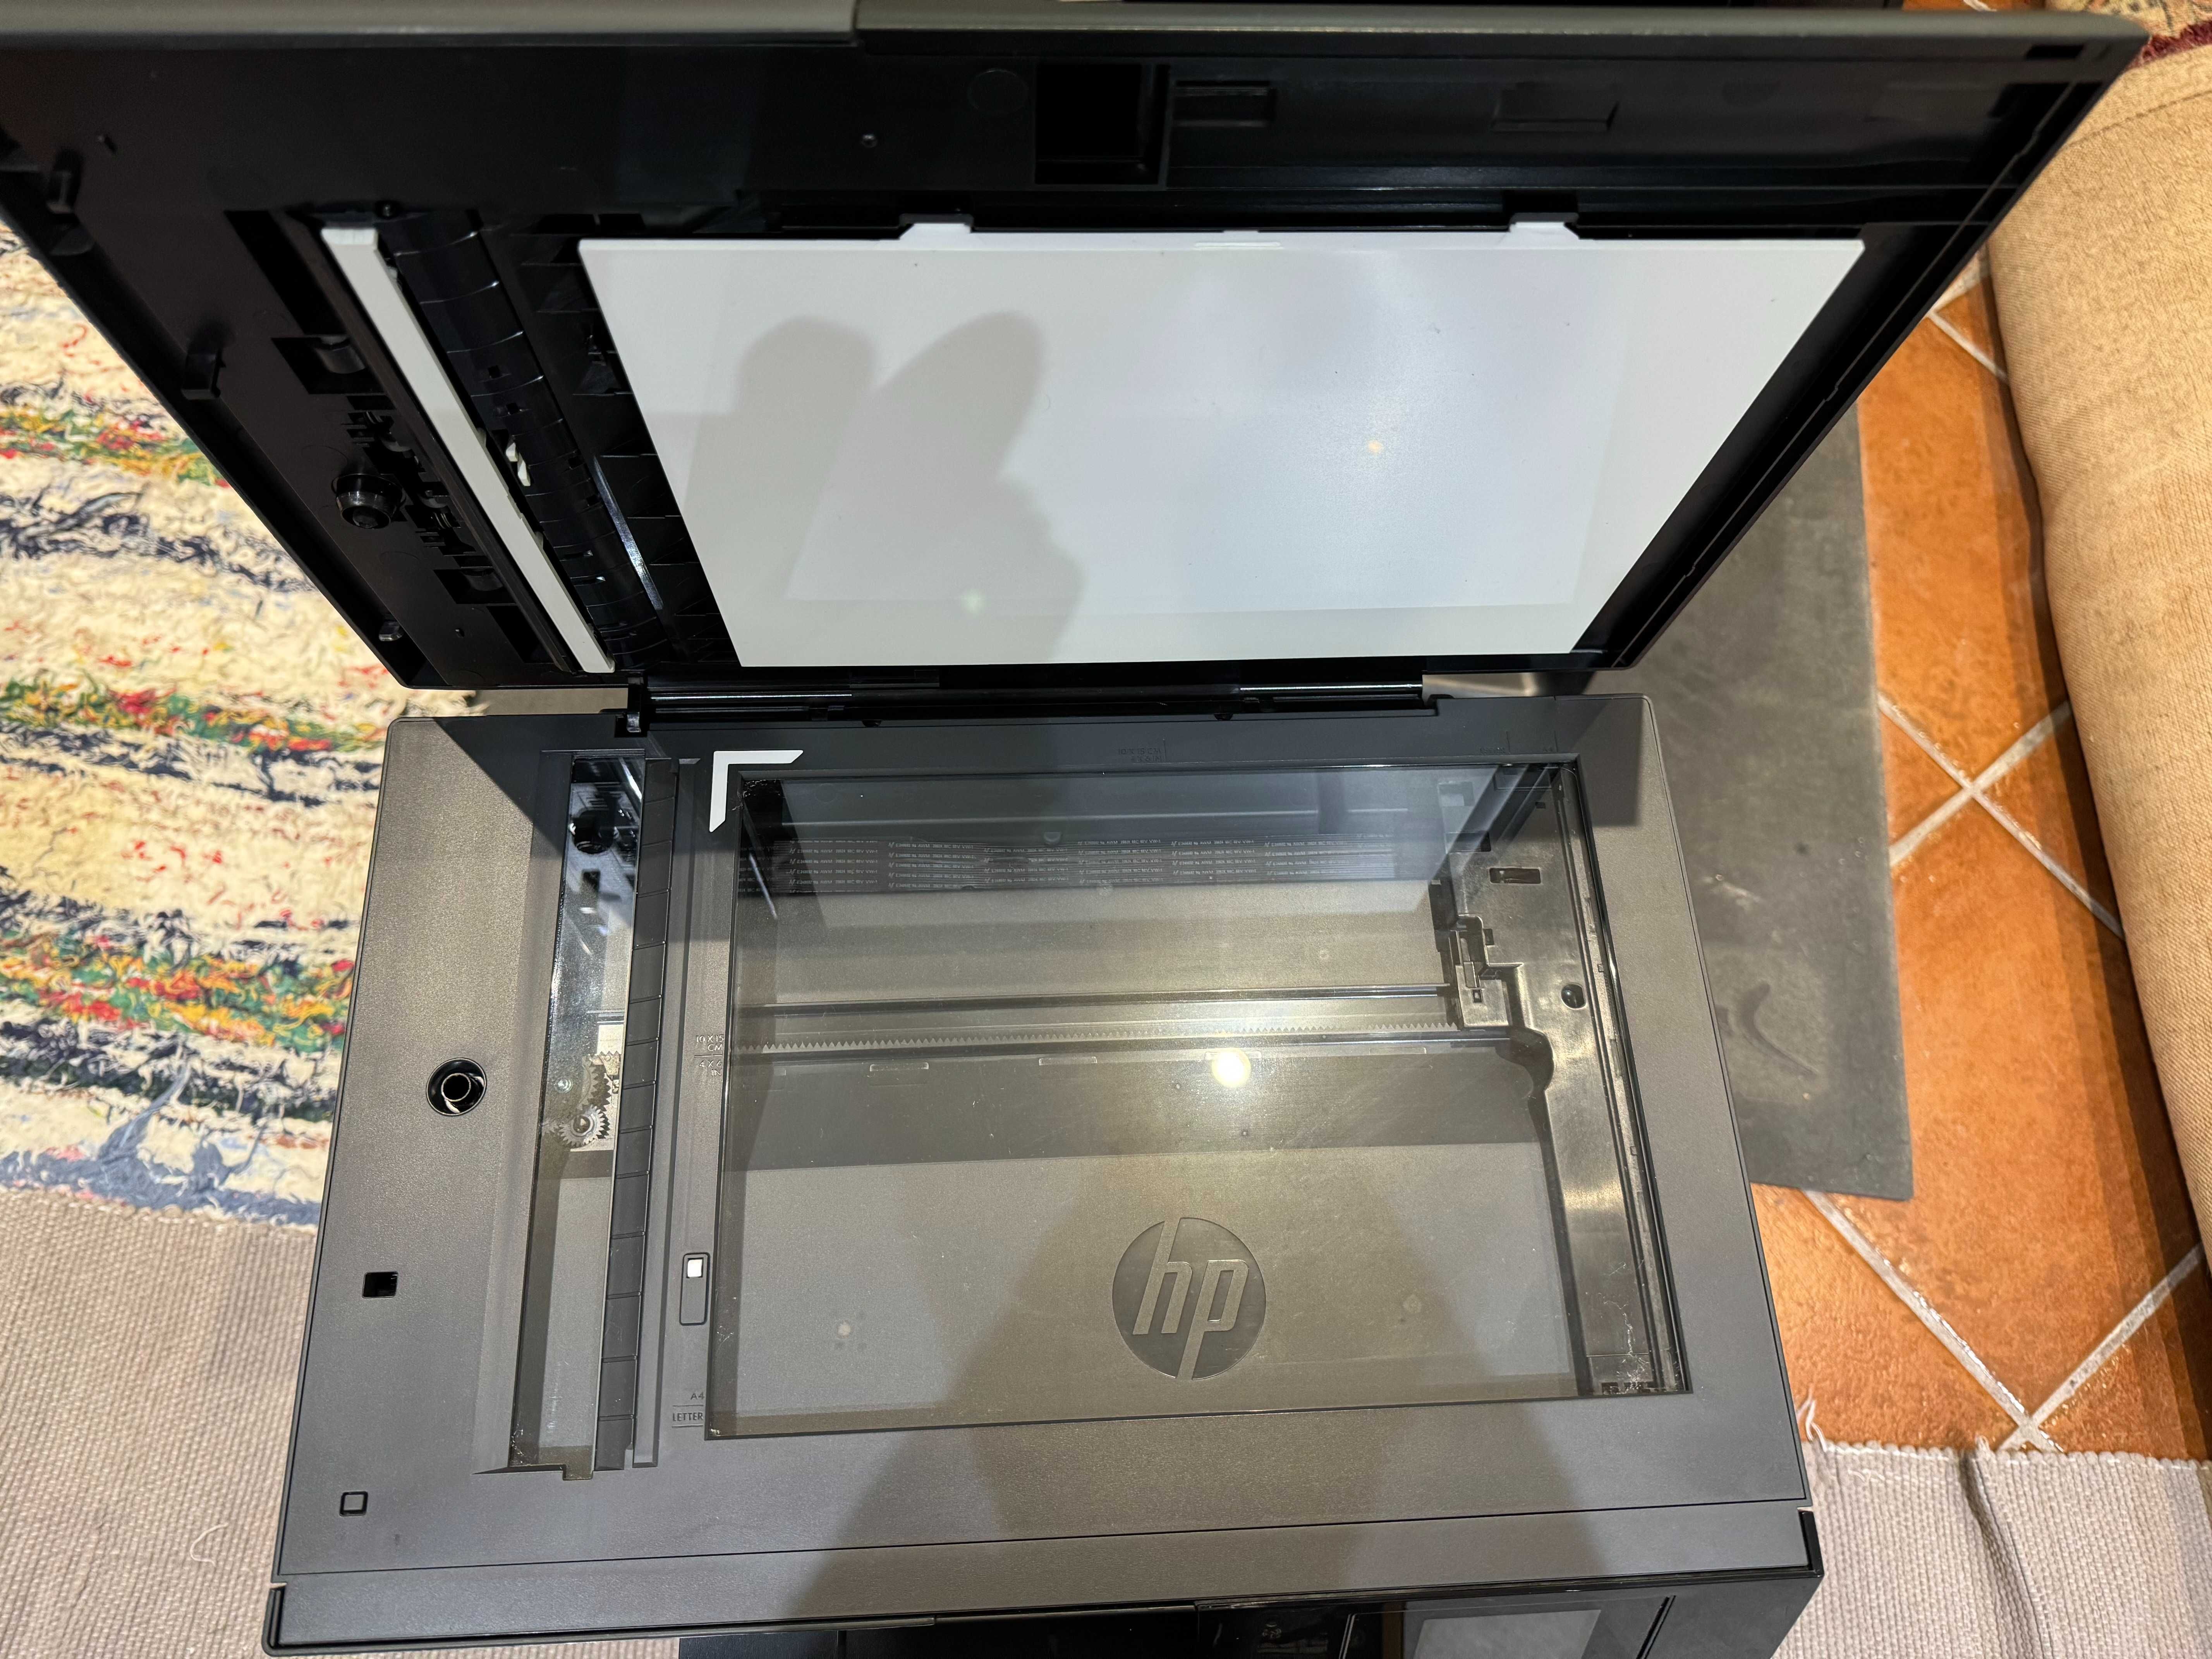 Impressora HP Officejet Pro 6830